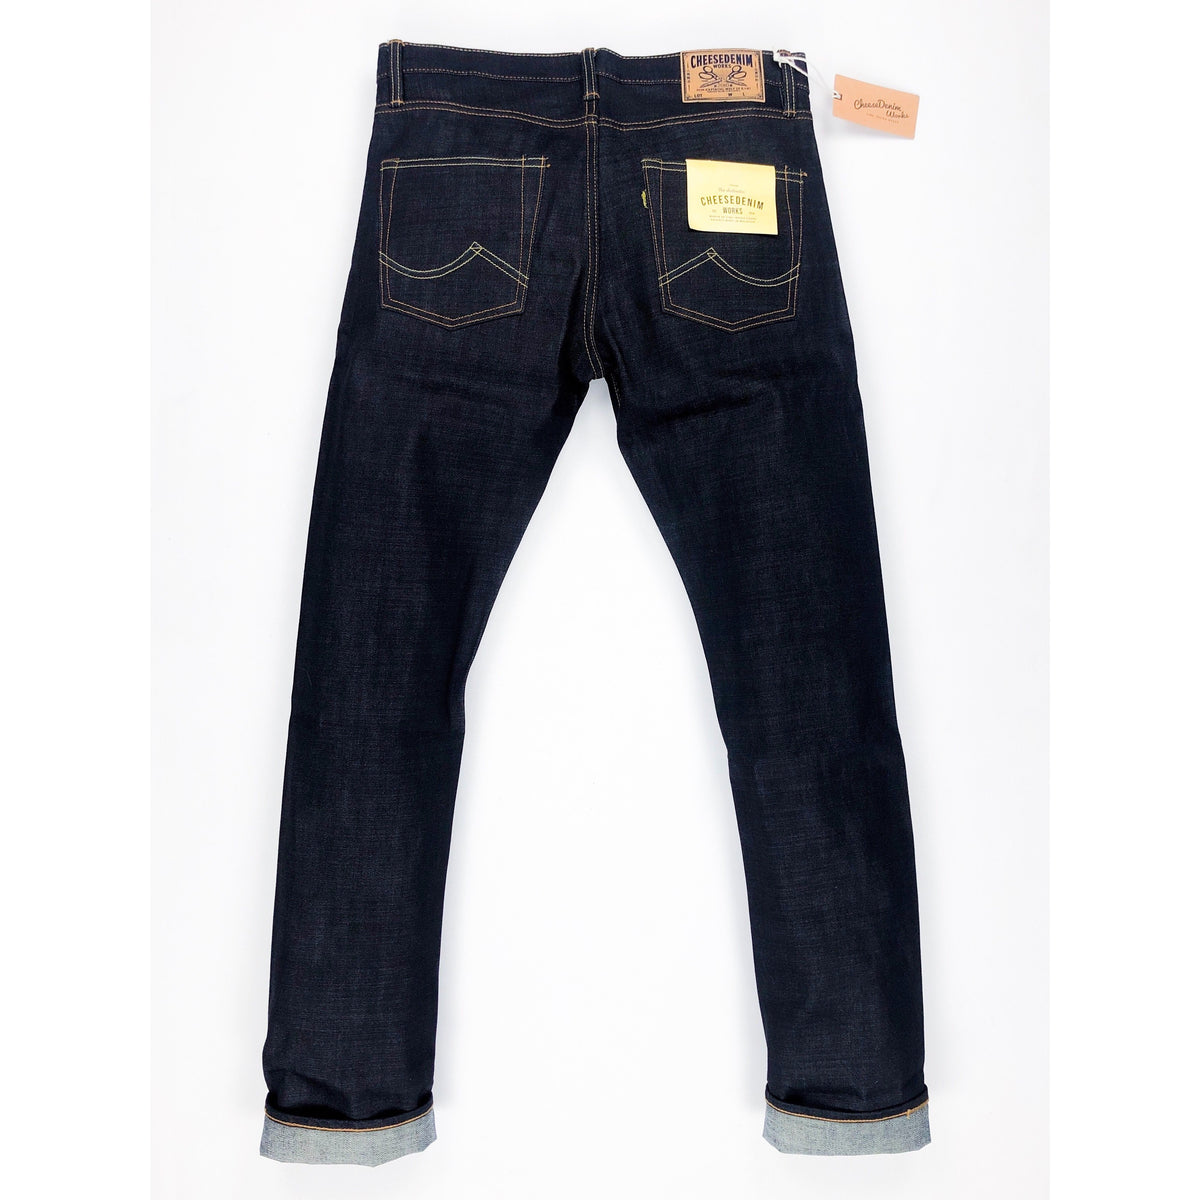 cheese-denim-works-sf-141-15oz-japanese-selvedge-jeans-slim-cut-340700 ...